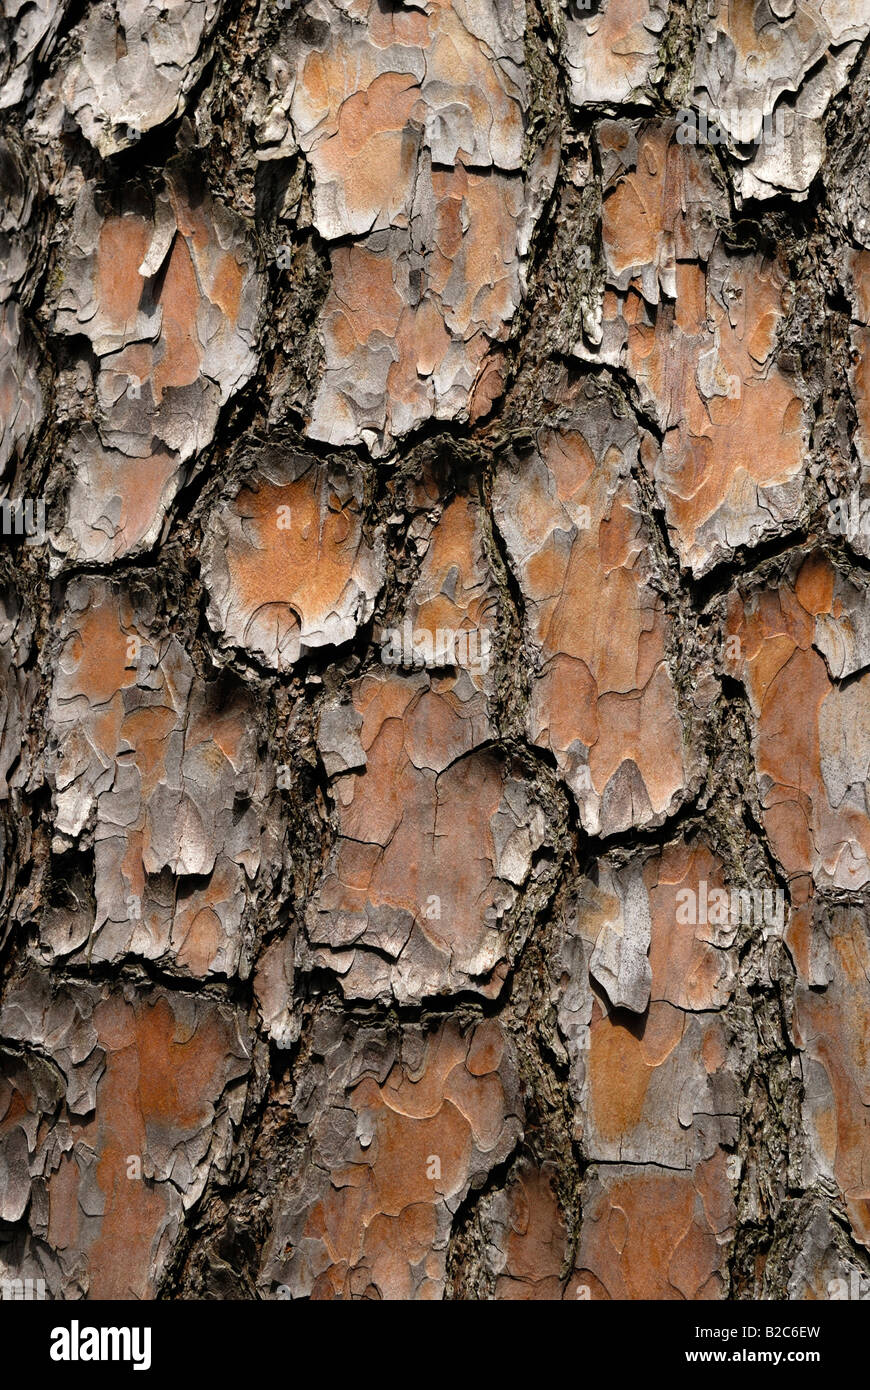 Pine (Pinus silvestris), bark surface structure, Botanischer Garten, Botanic Garden, Munich, Germany, Europe Stock Photo